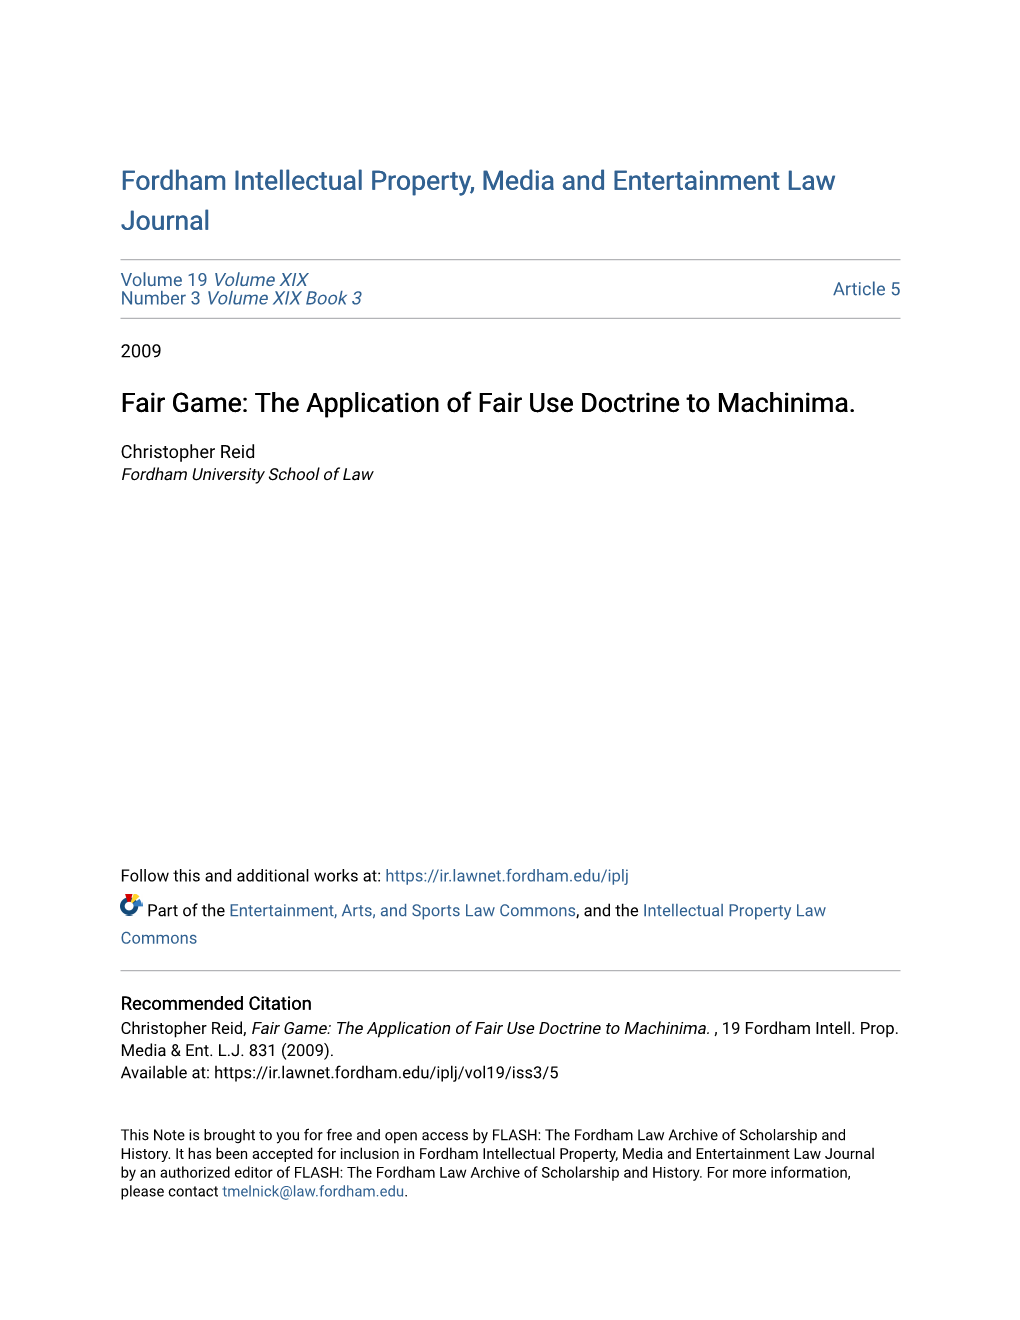 Fair Game: the Application of Fair Use Doctrine to Machinima